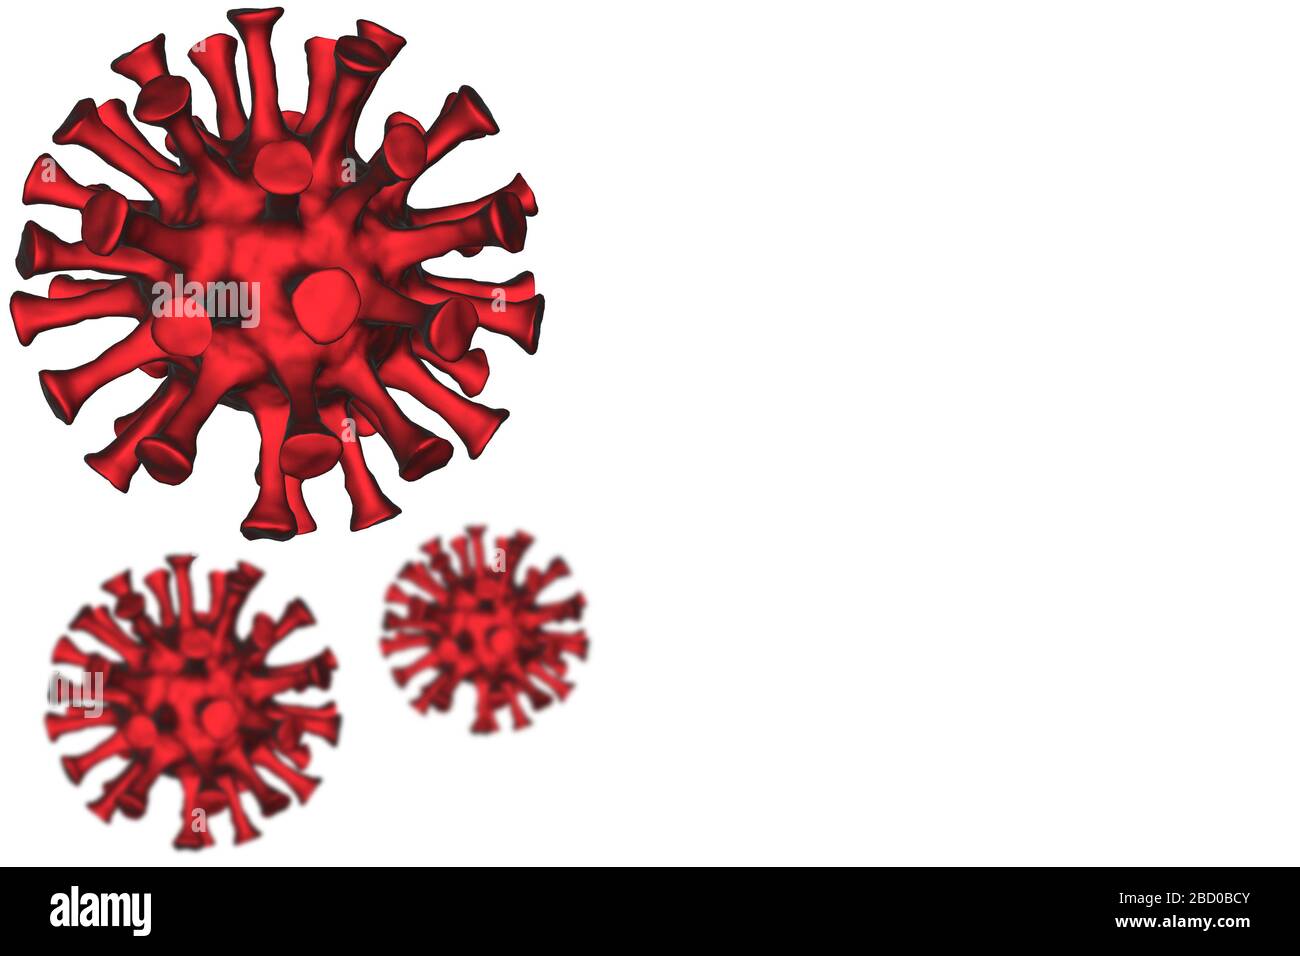 3d model of a corona virus coronavirus covid 19 RNA virus against a plain background allowing room for text Stock Photo